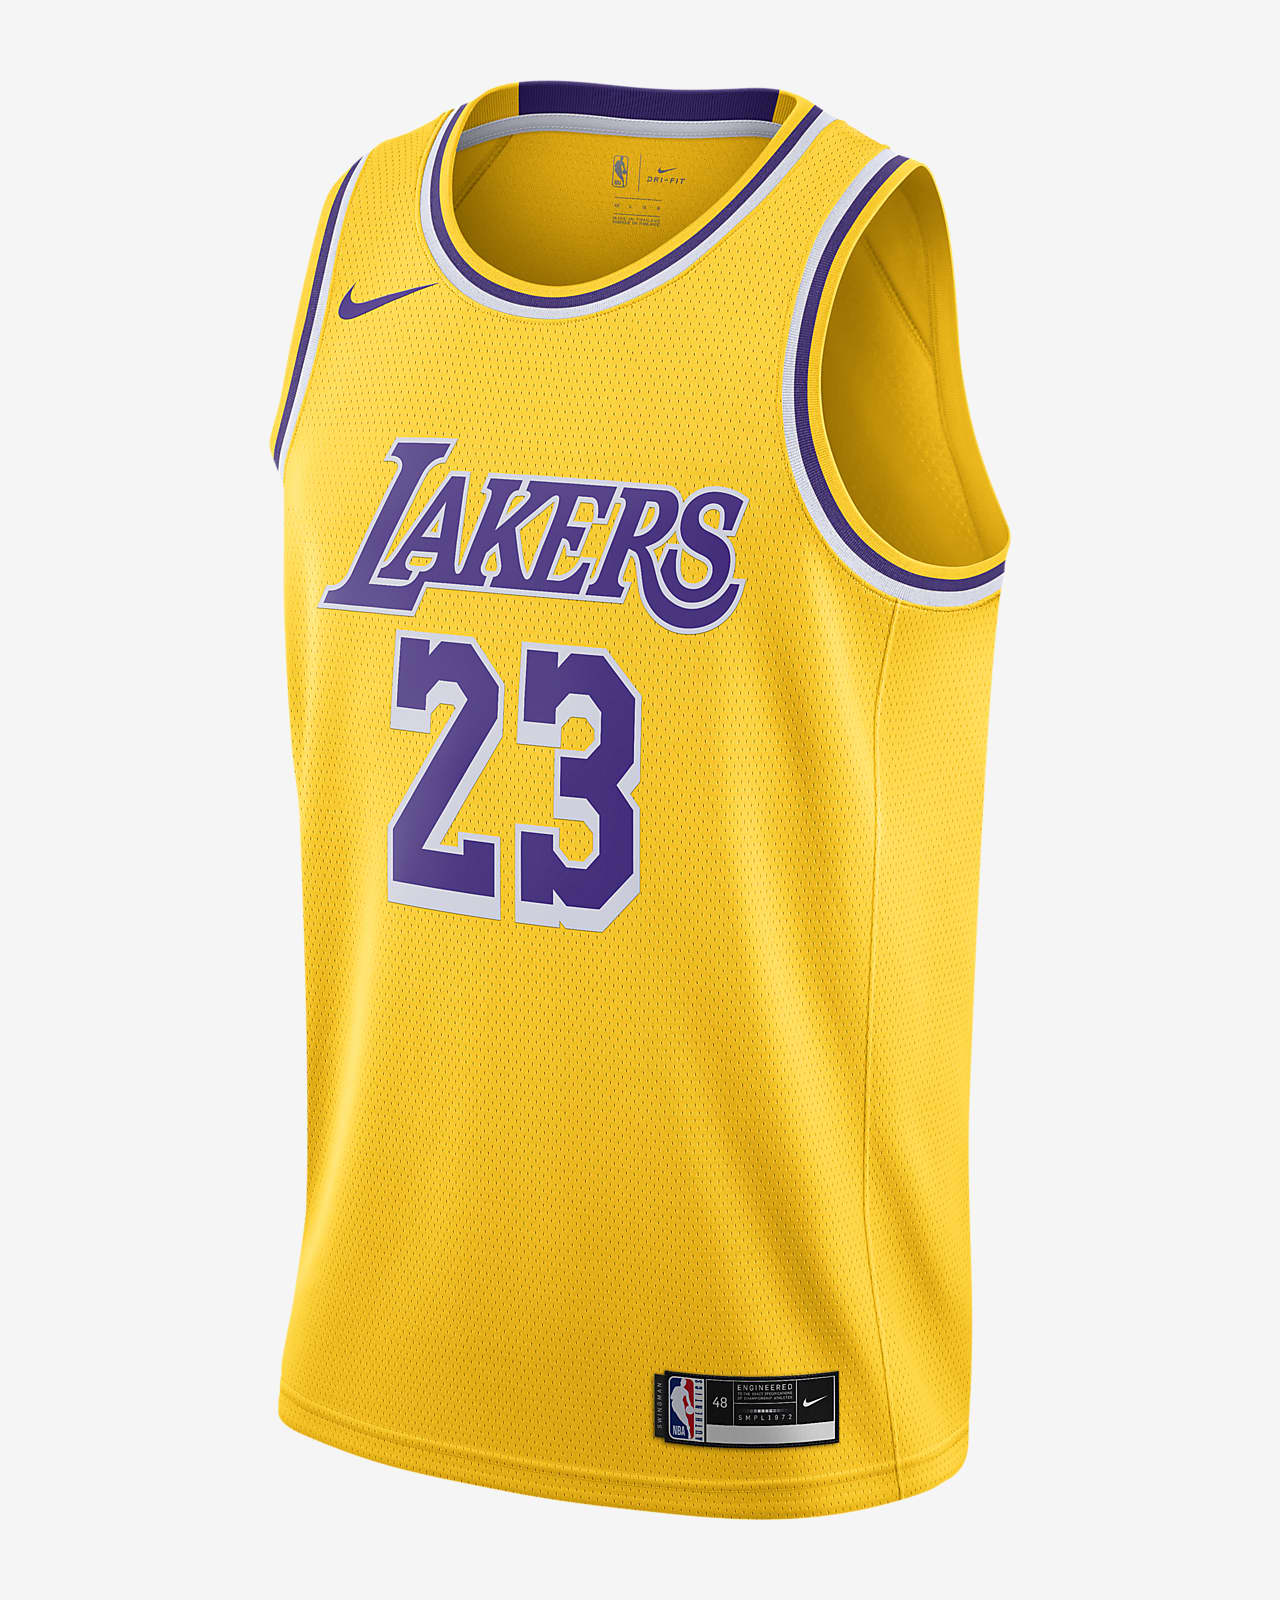 2020 赛季洛杉矶湖人队 (LeBron James) Icon Edition Nike NBA Swingman Jersey 男子球衣